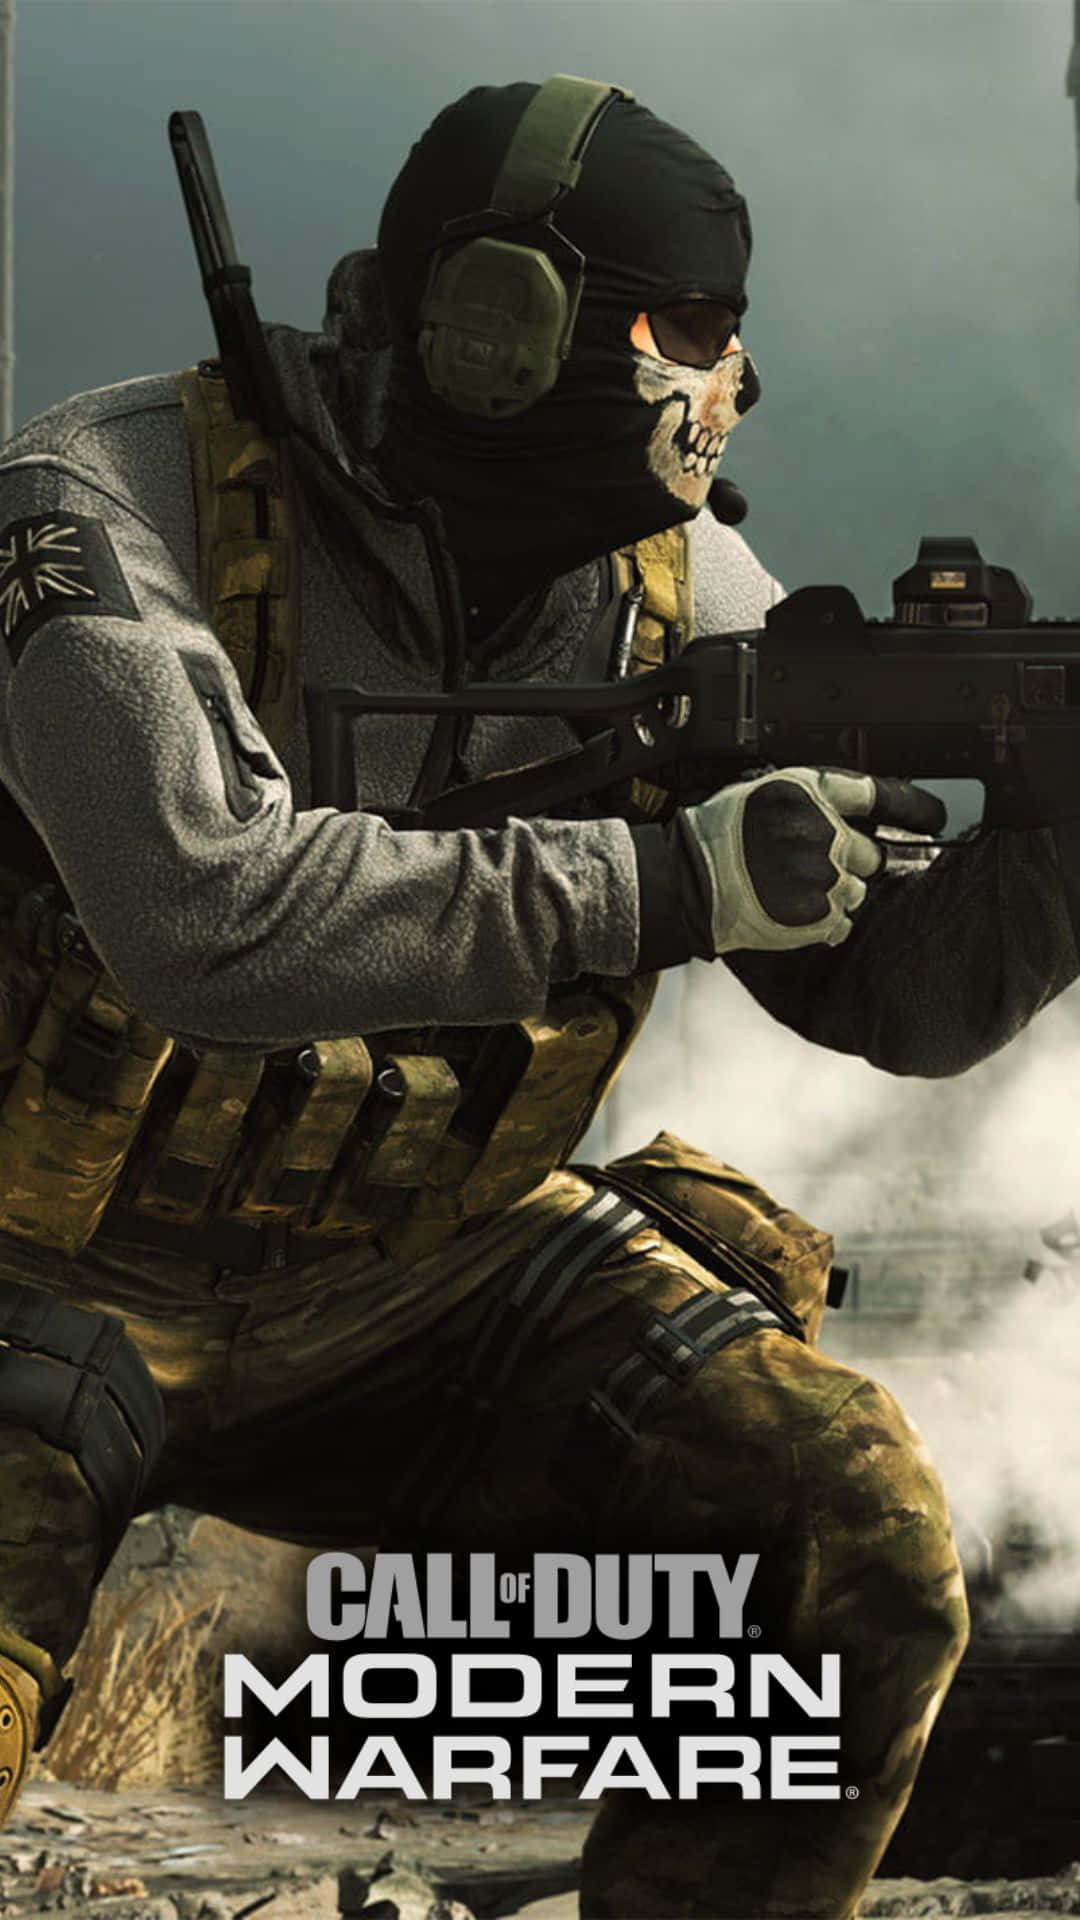 Intense war scene in Android's Call of Duty Modern Warfare